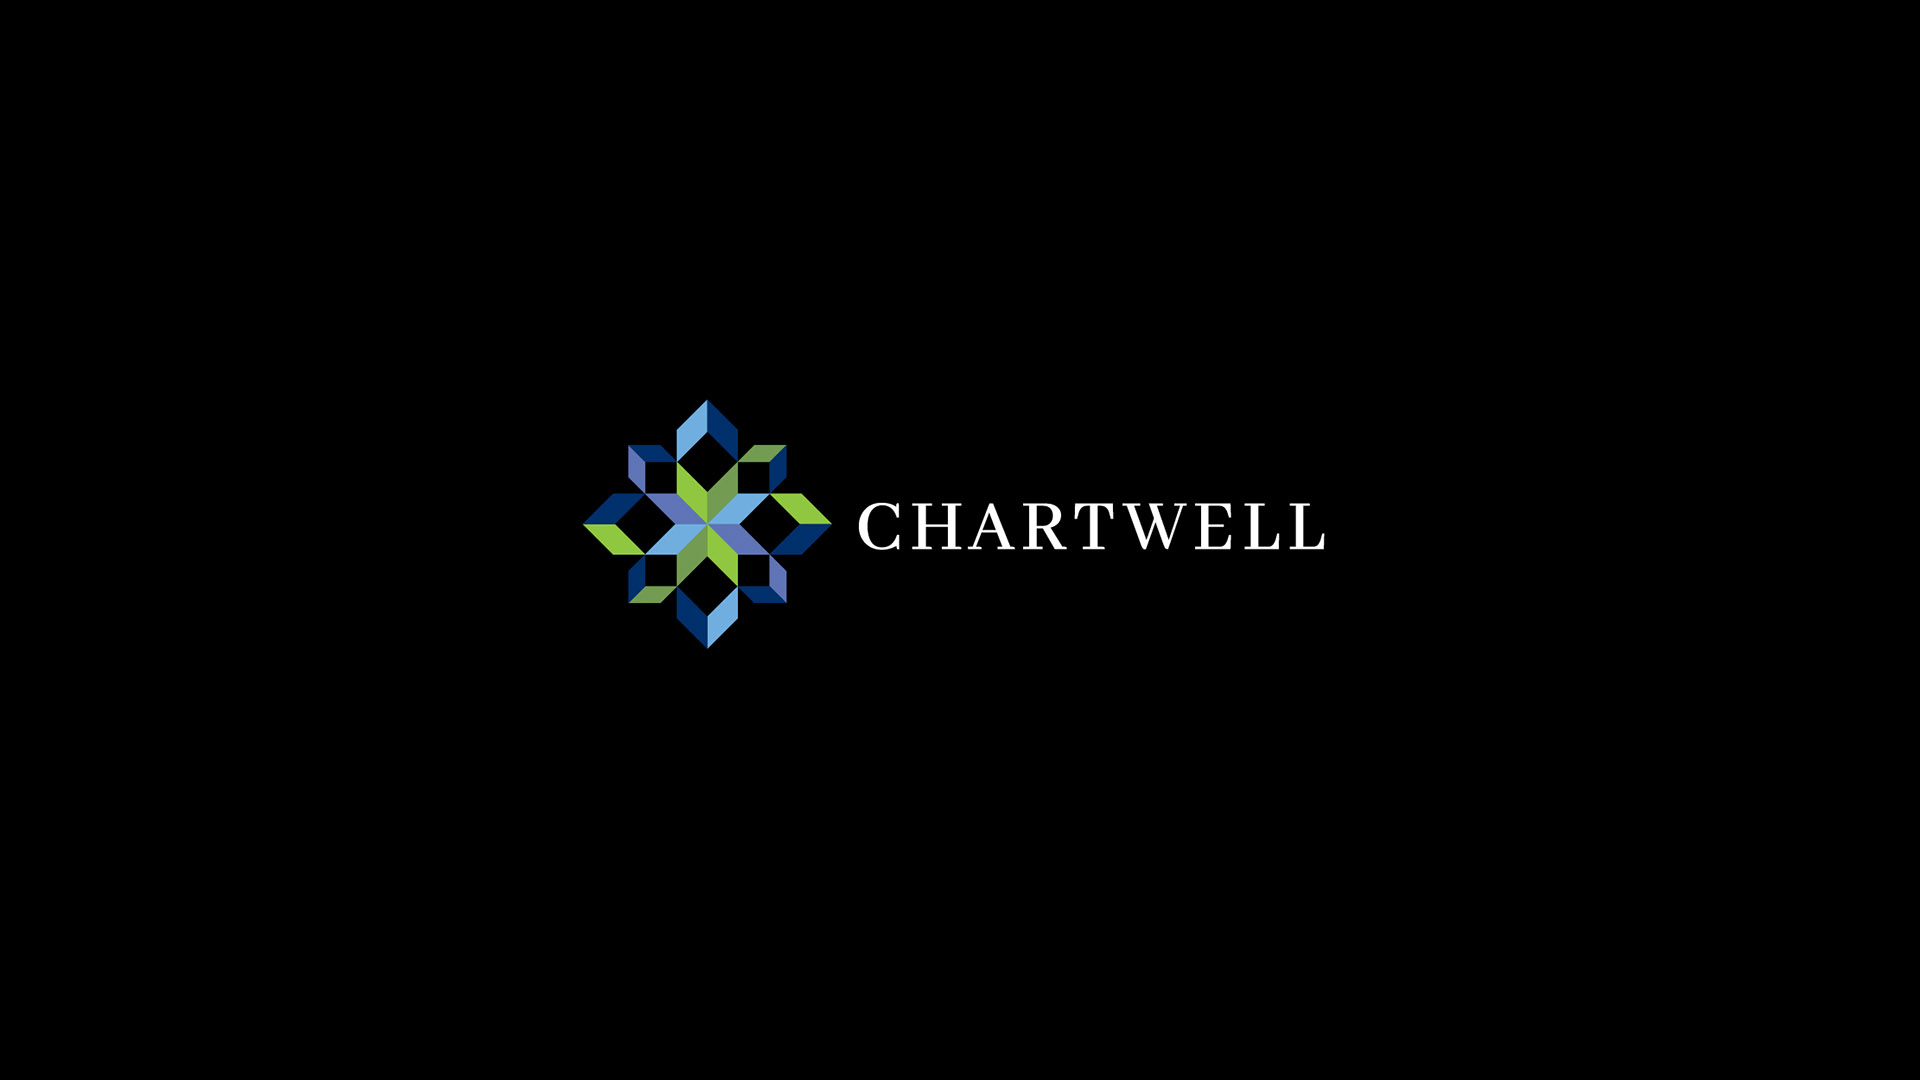 chartwell horizontal logo on black